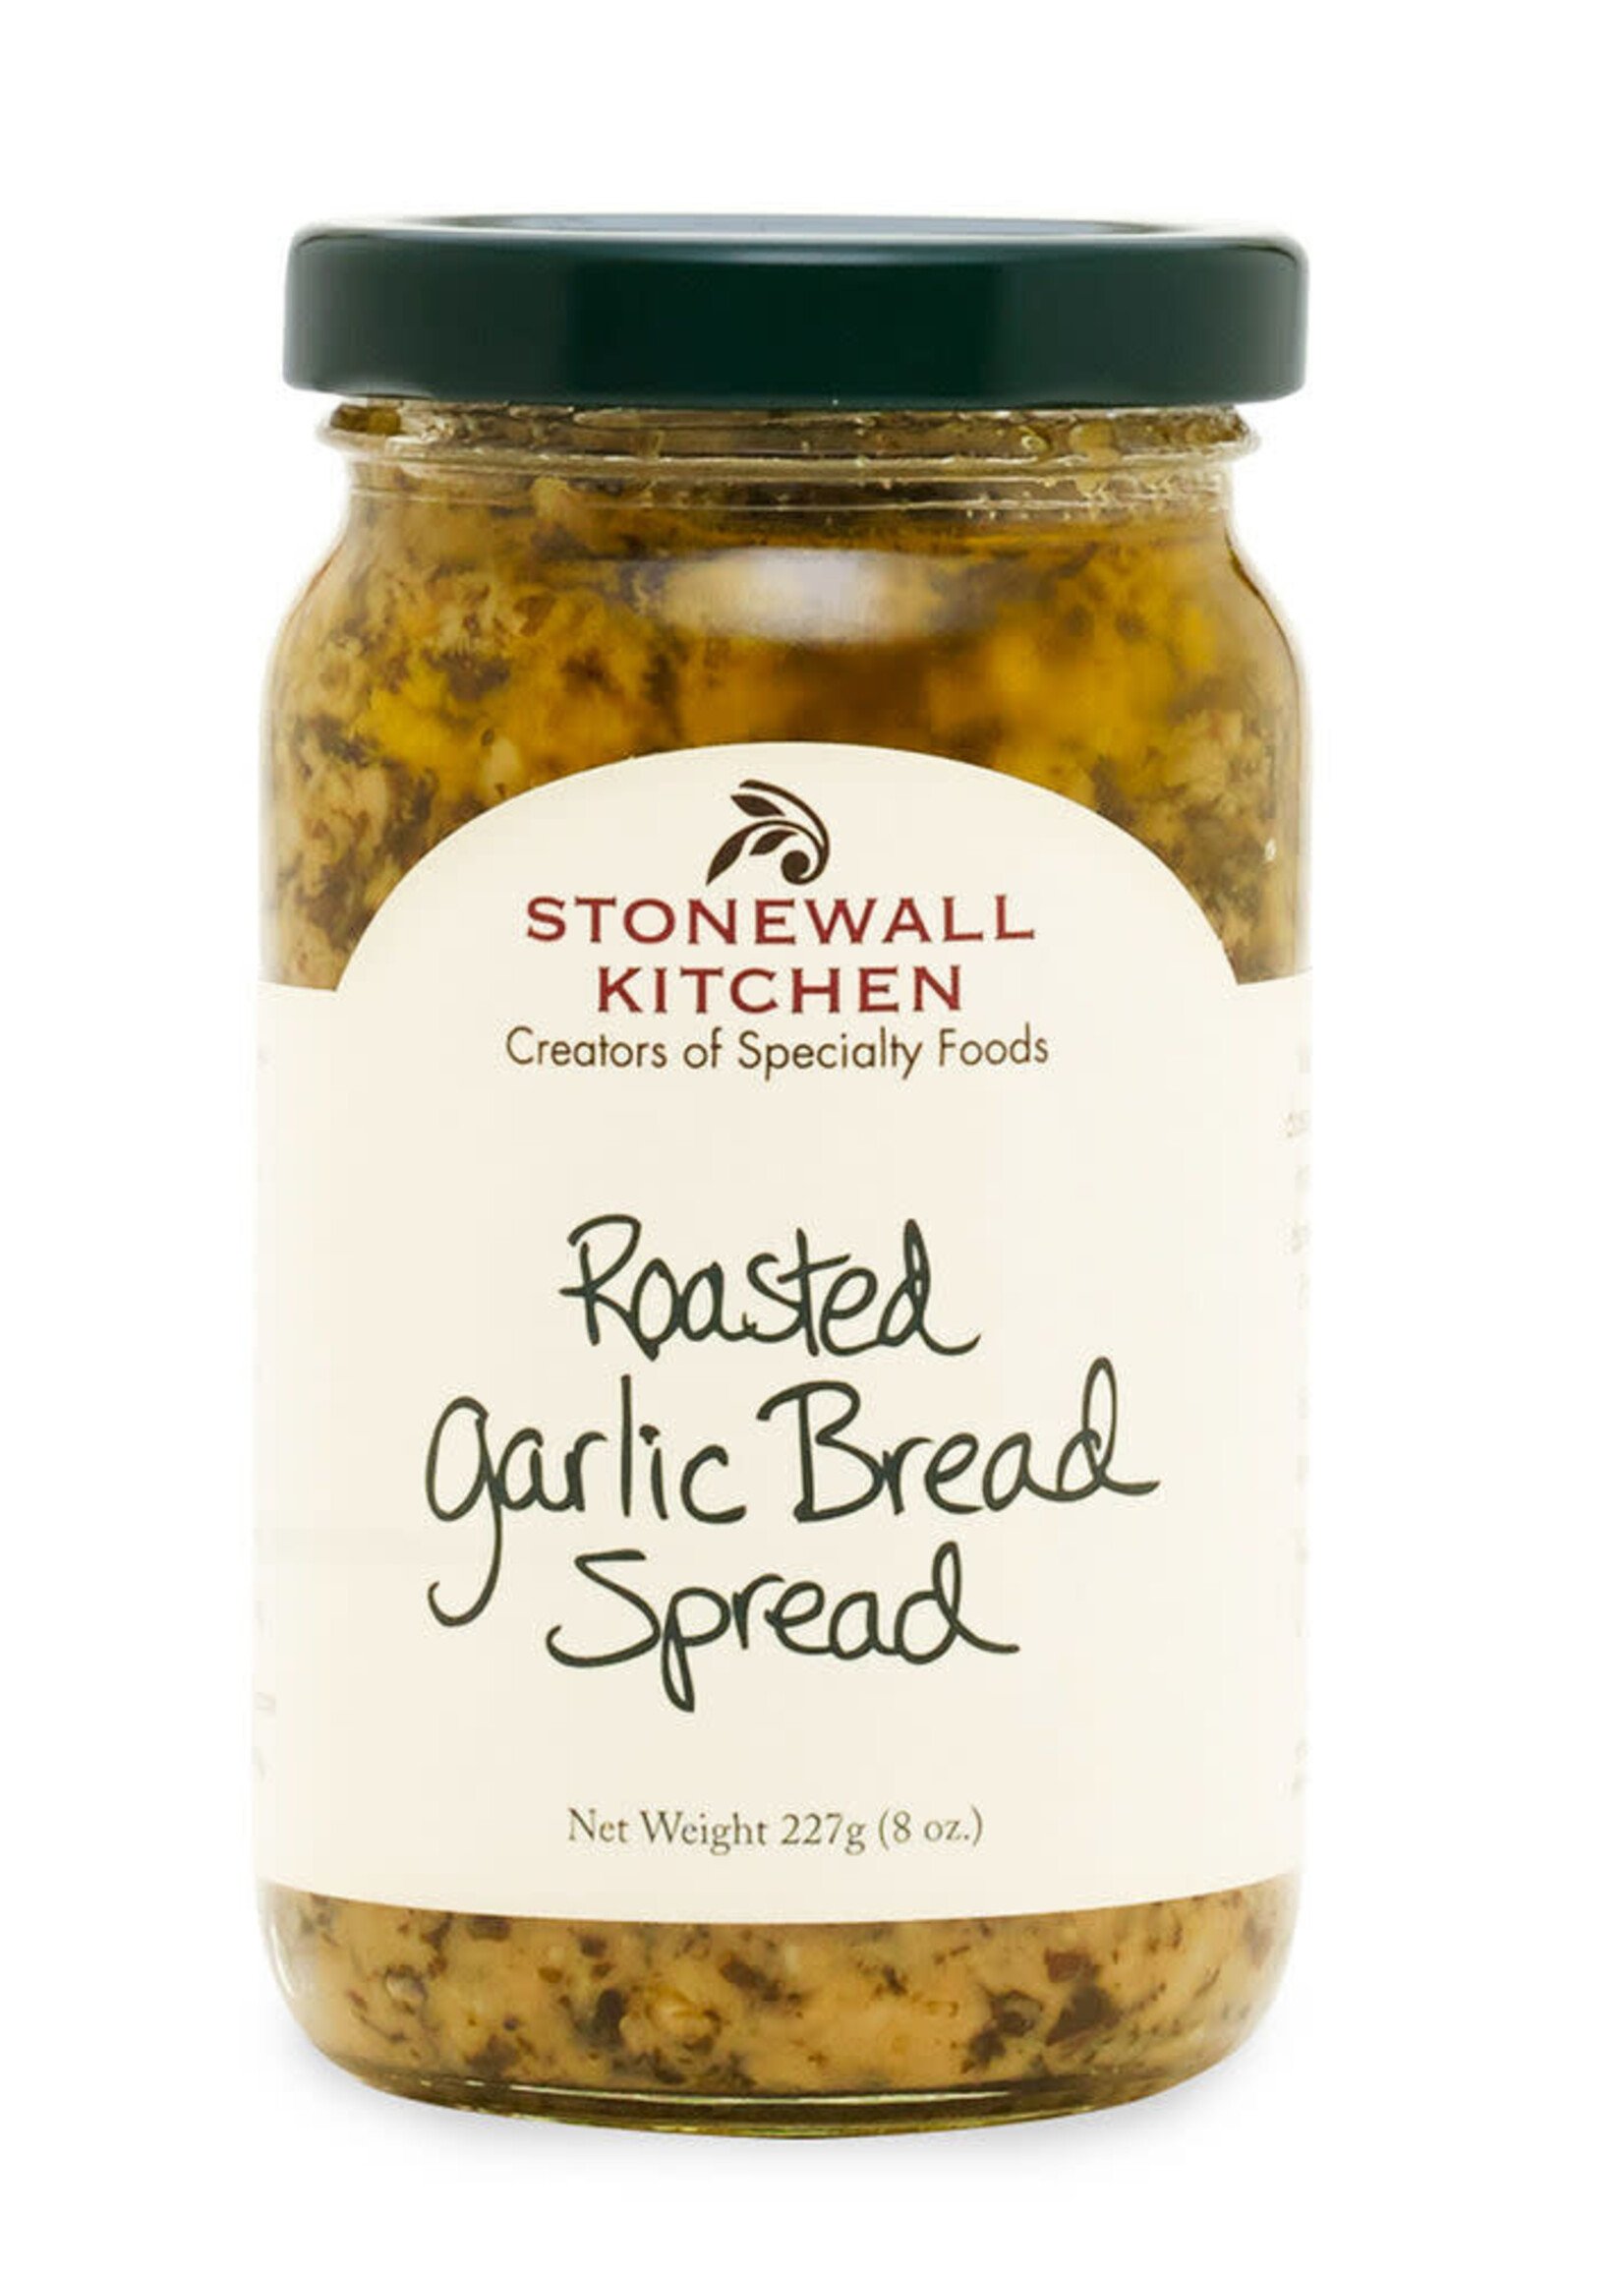 Stonewall Kitchen Stonewall Kitchen - Roasted Garlic Bread Spread8oz - 150812